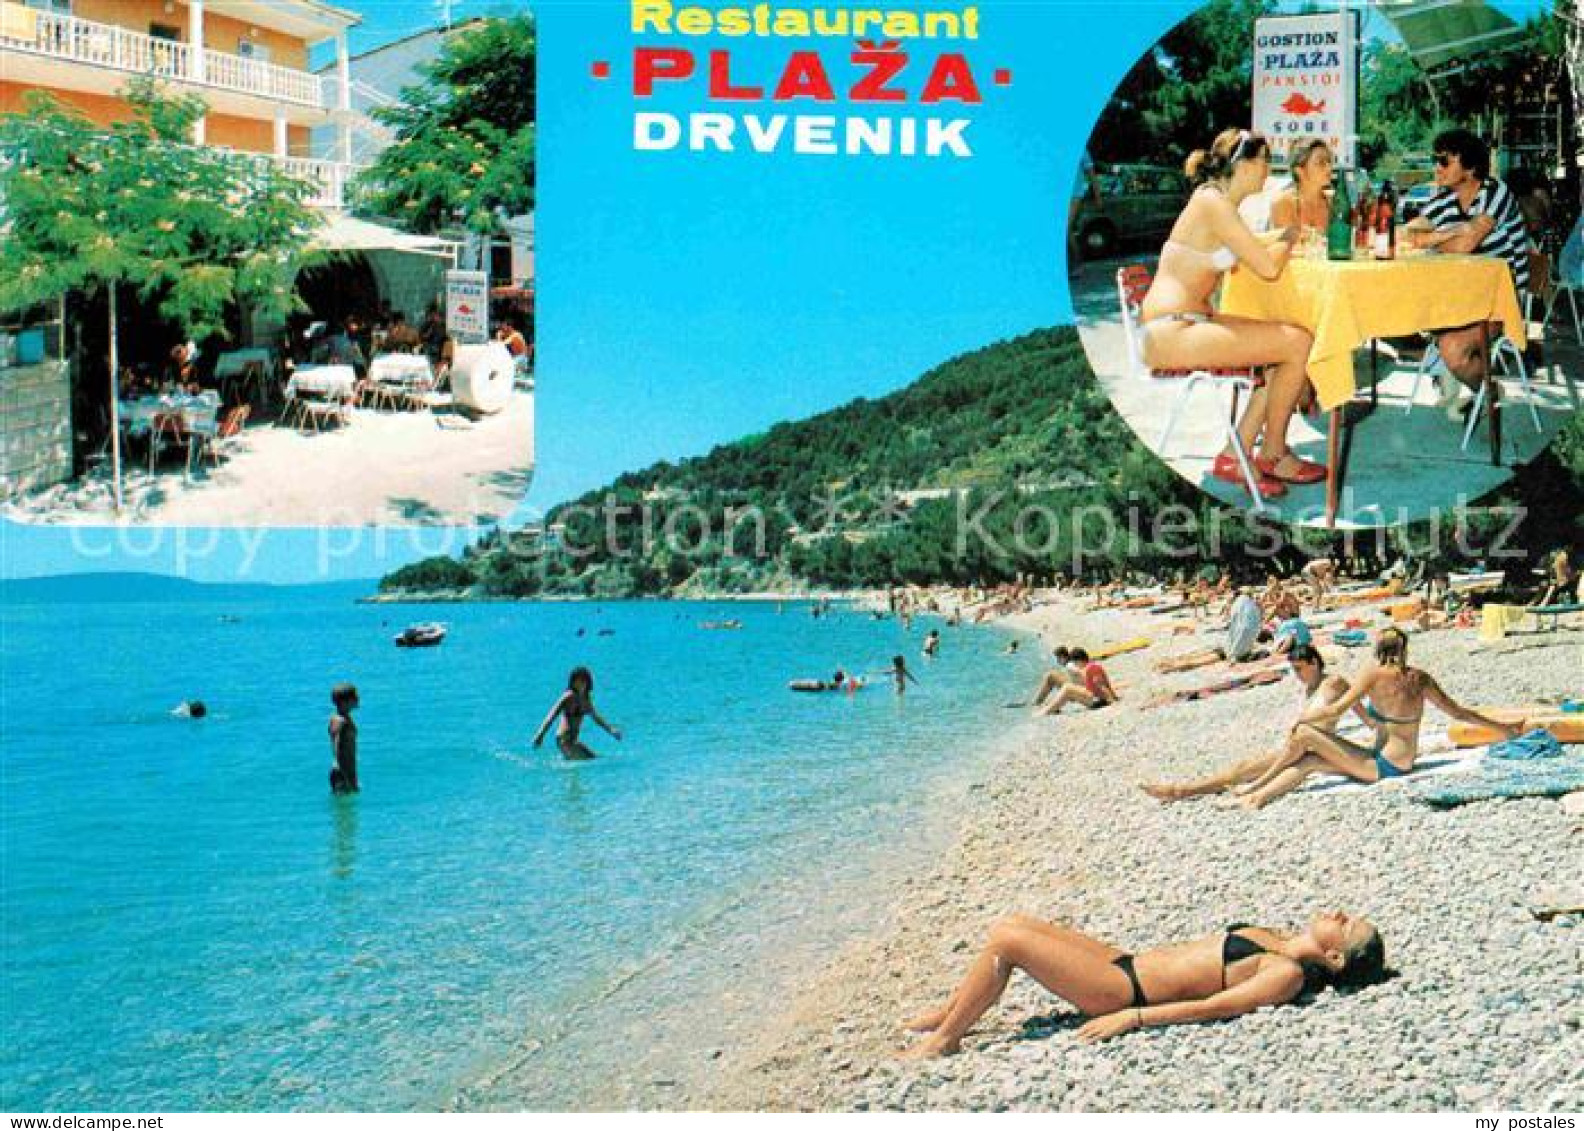 72750227 Drvenik Restaurant Plaza Drvenik - Croatie